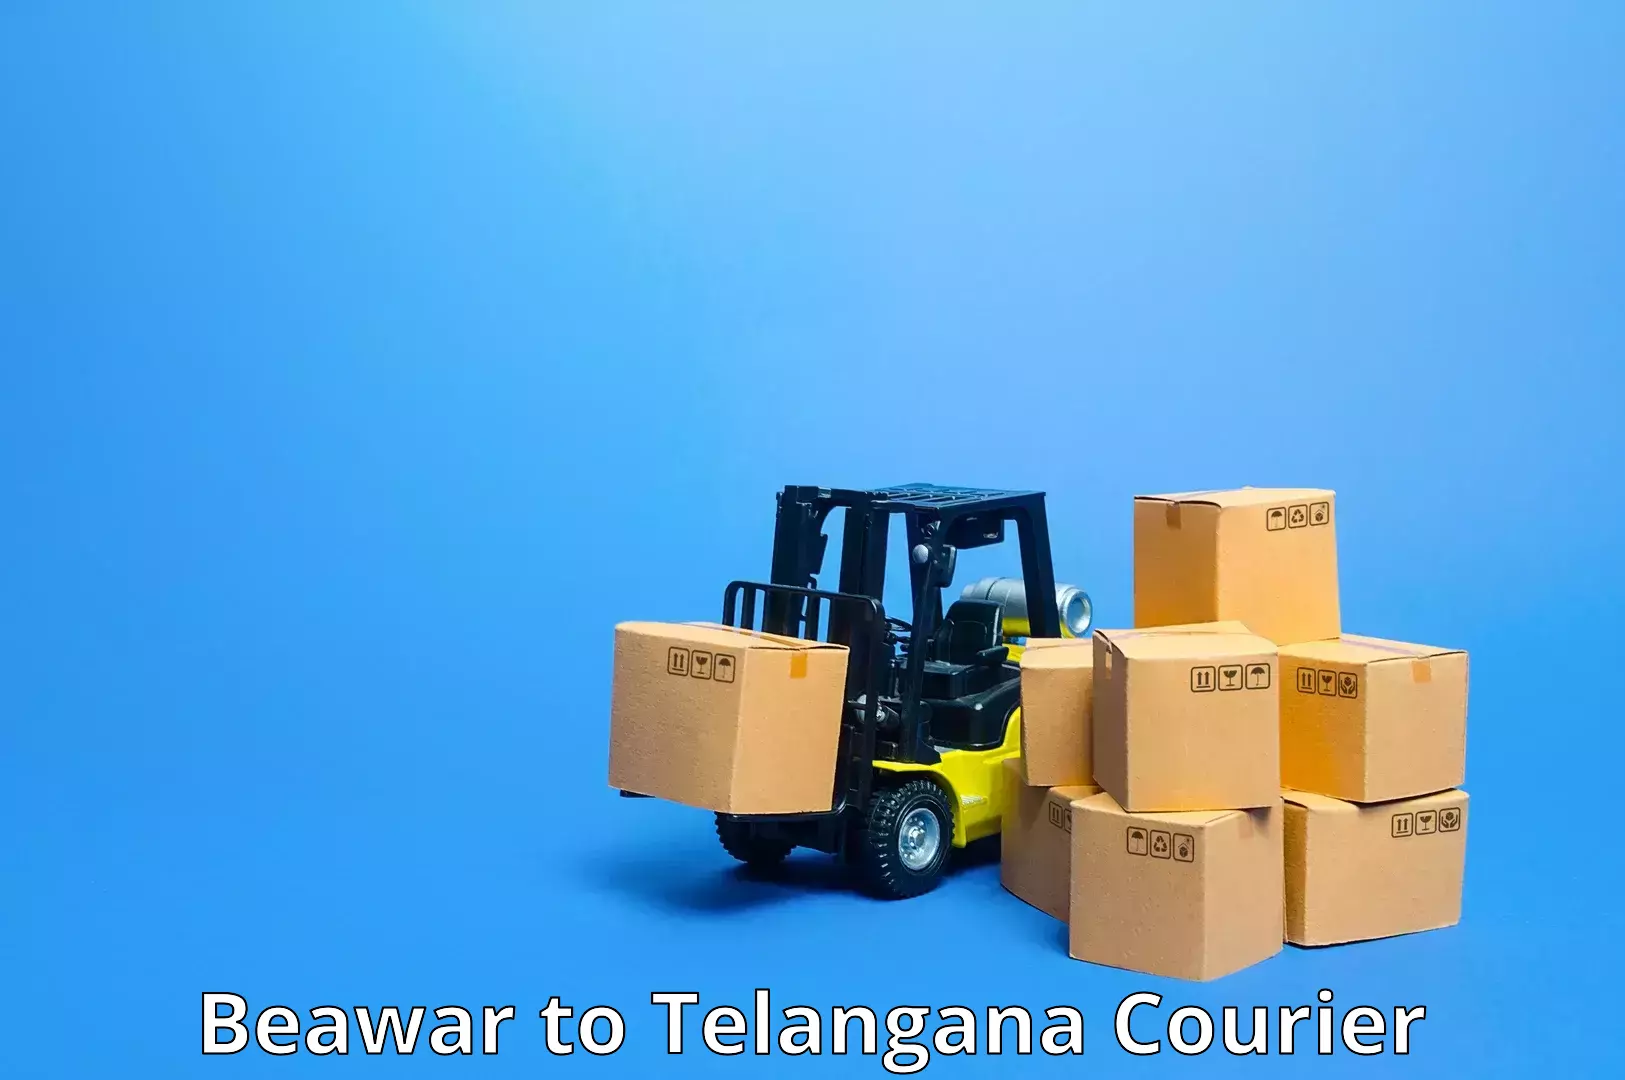 High-speed parcel service Beawar to Alair